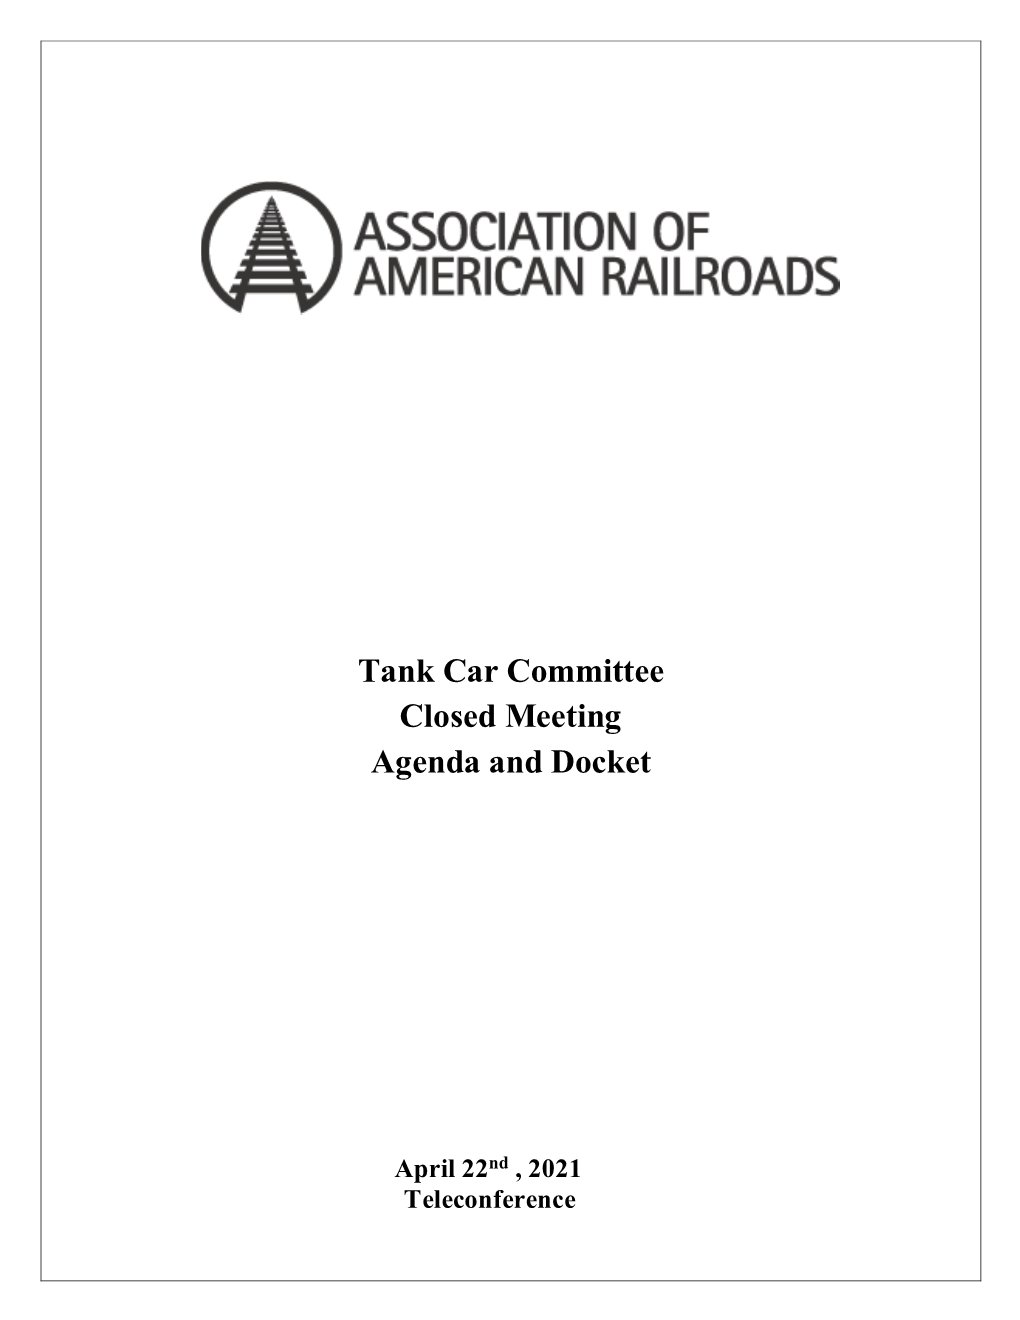 Tank Car Committee Closed Meeting Agenda and Docket